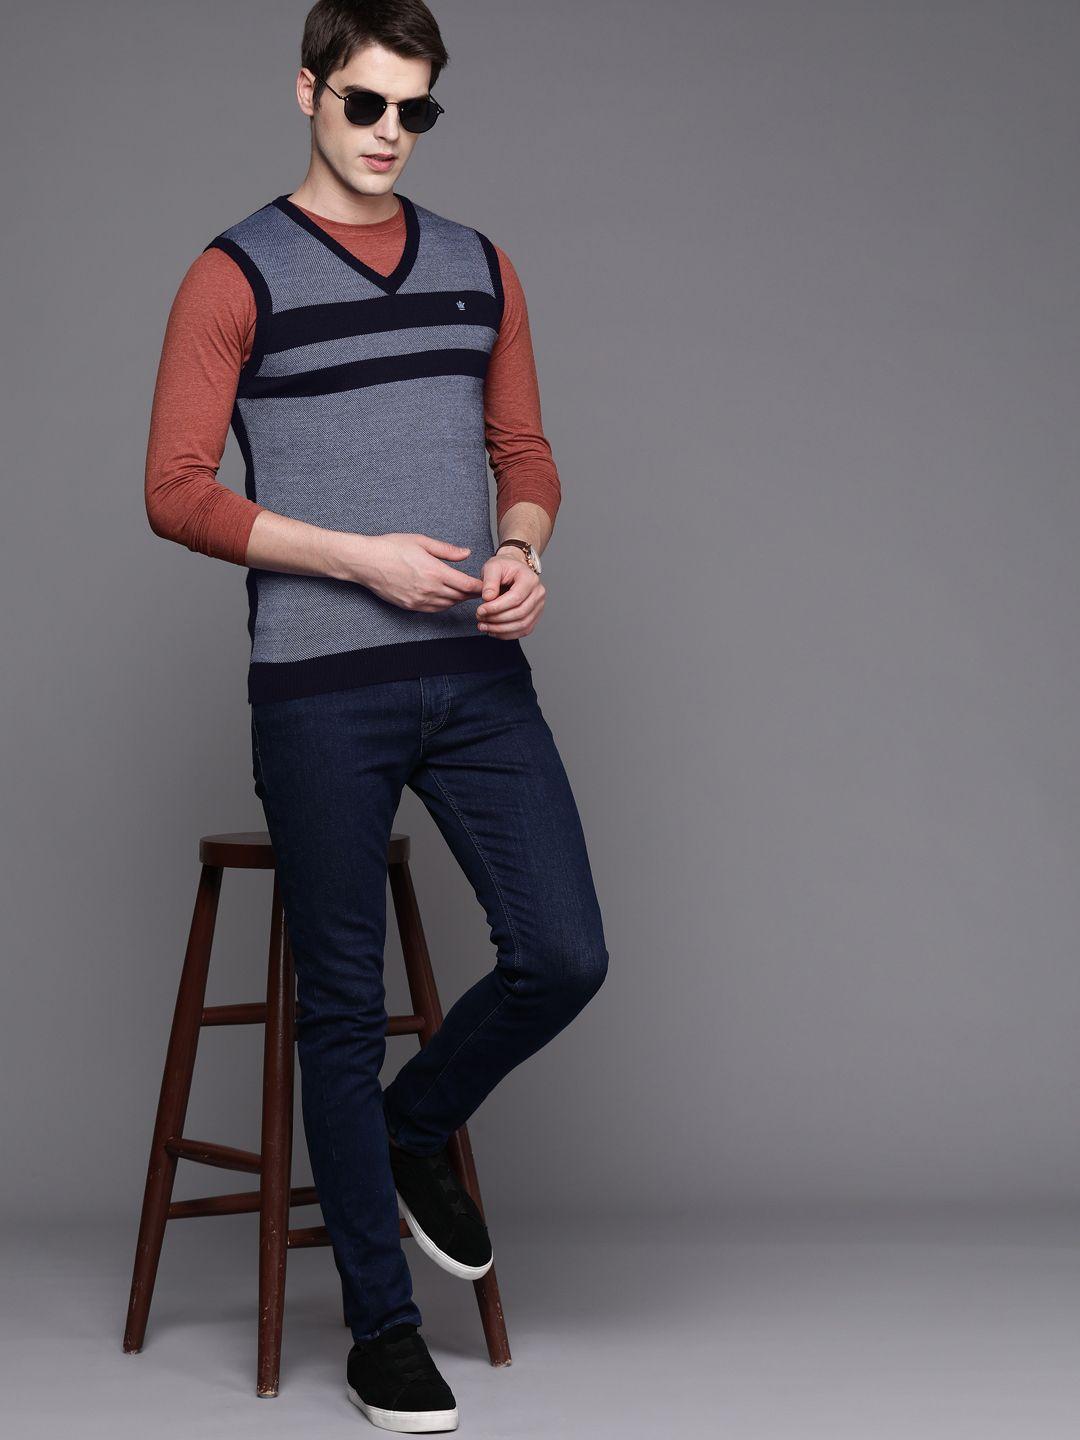 louis philippe men blue striped sweater vest